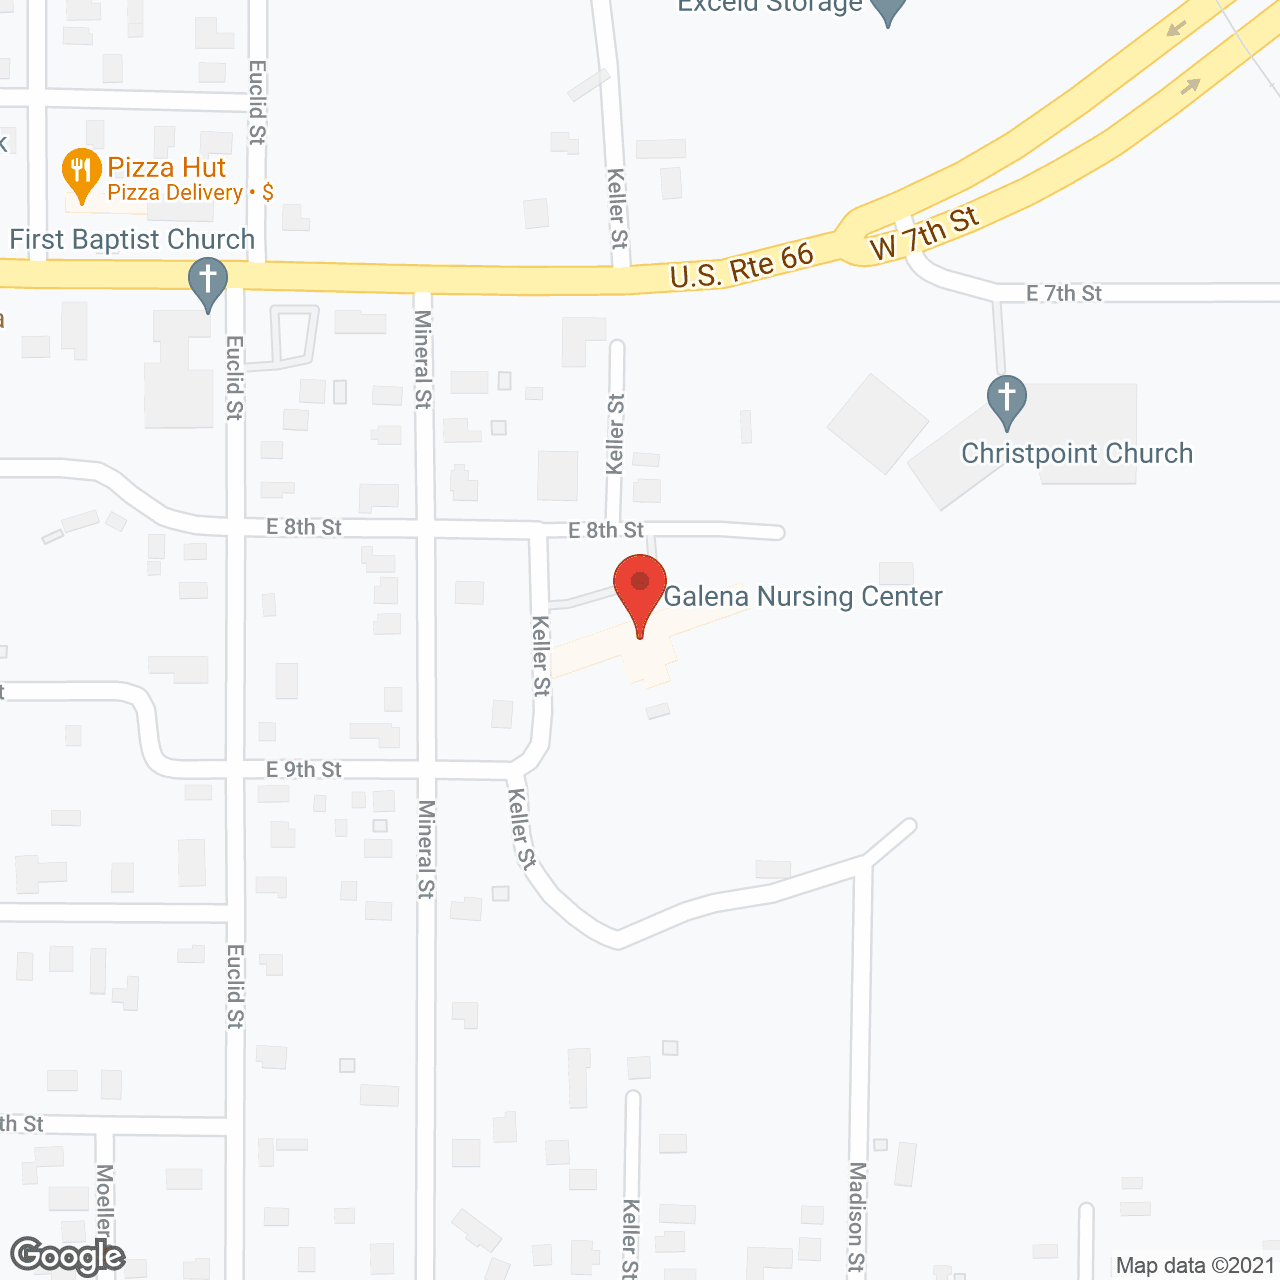 Galena Nursing Center in google map